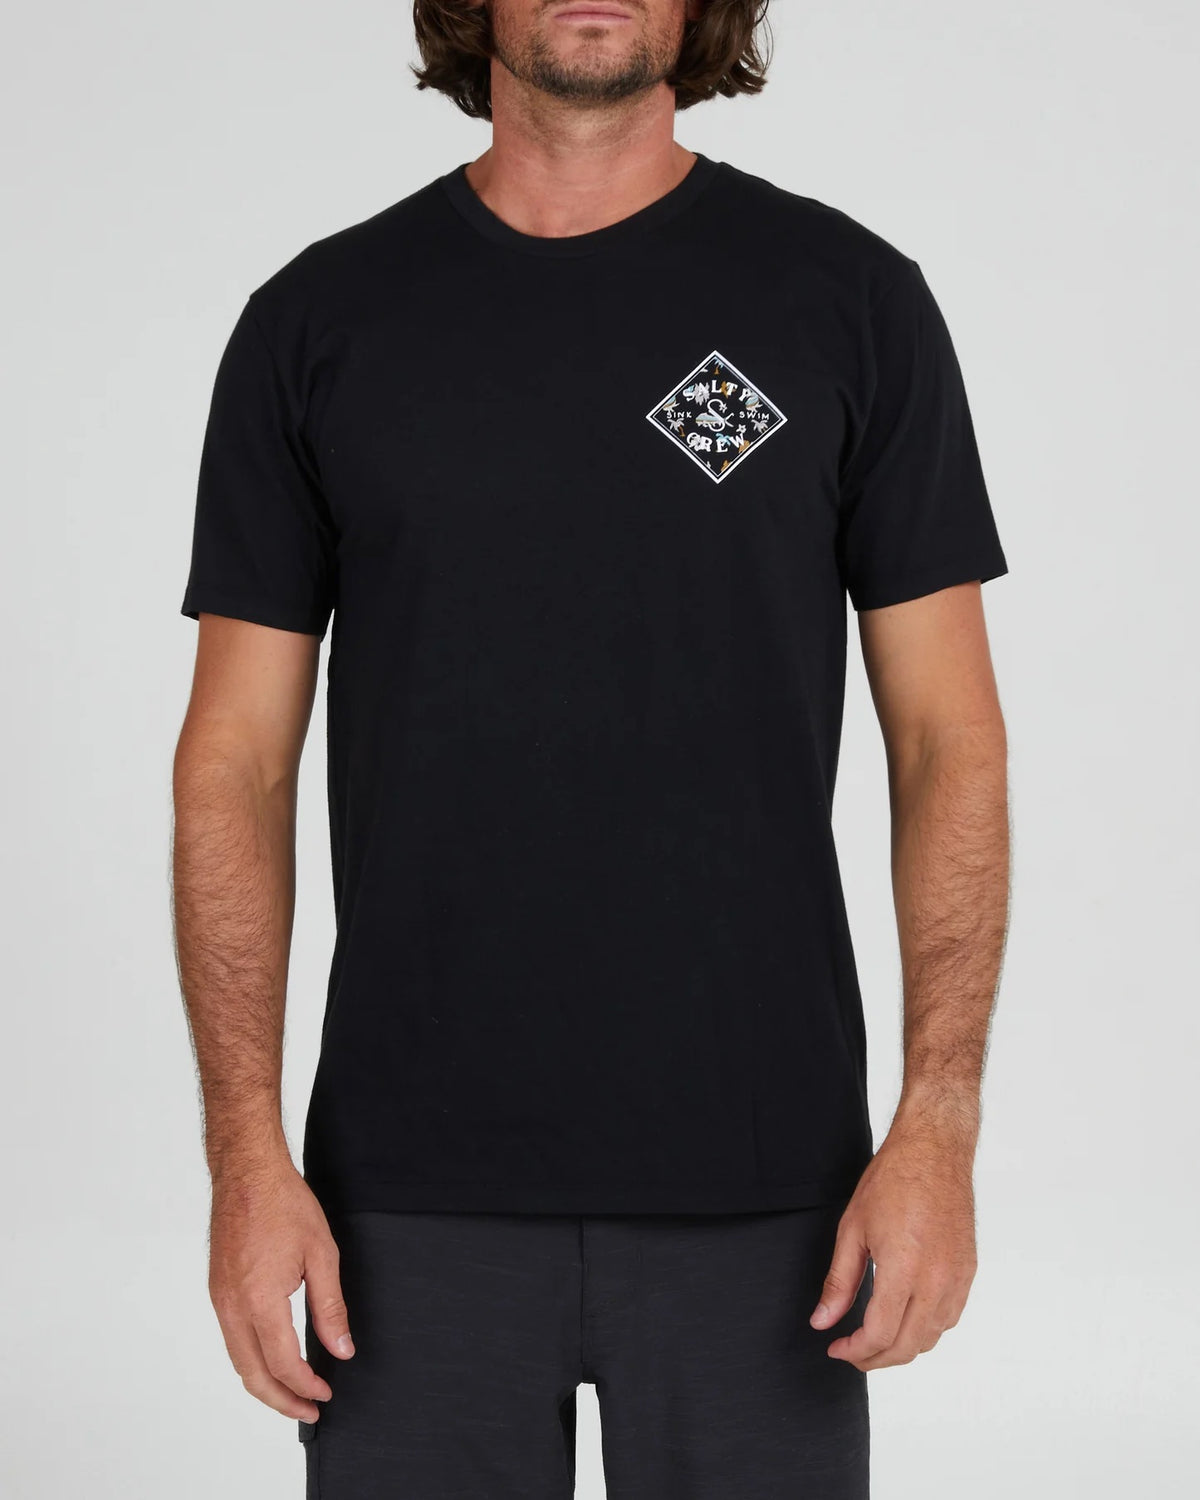 Tippet Shores Premium T-Shirt